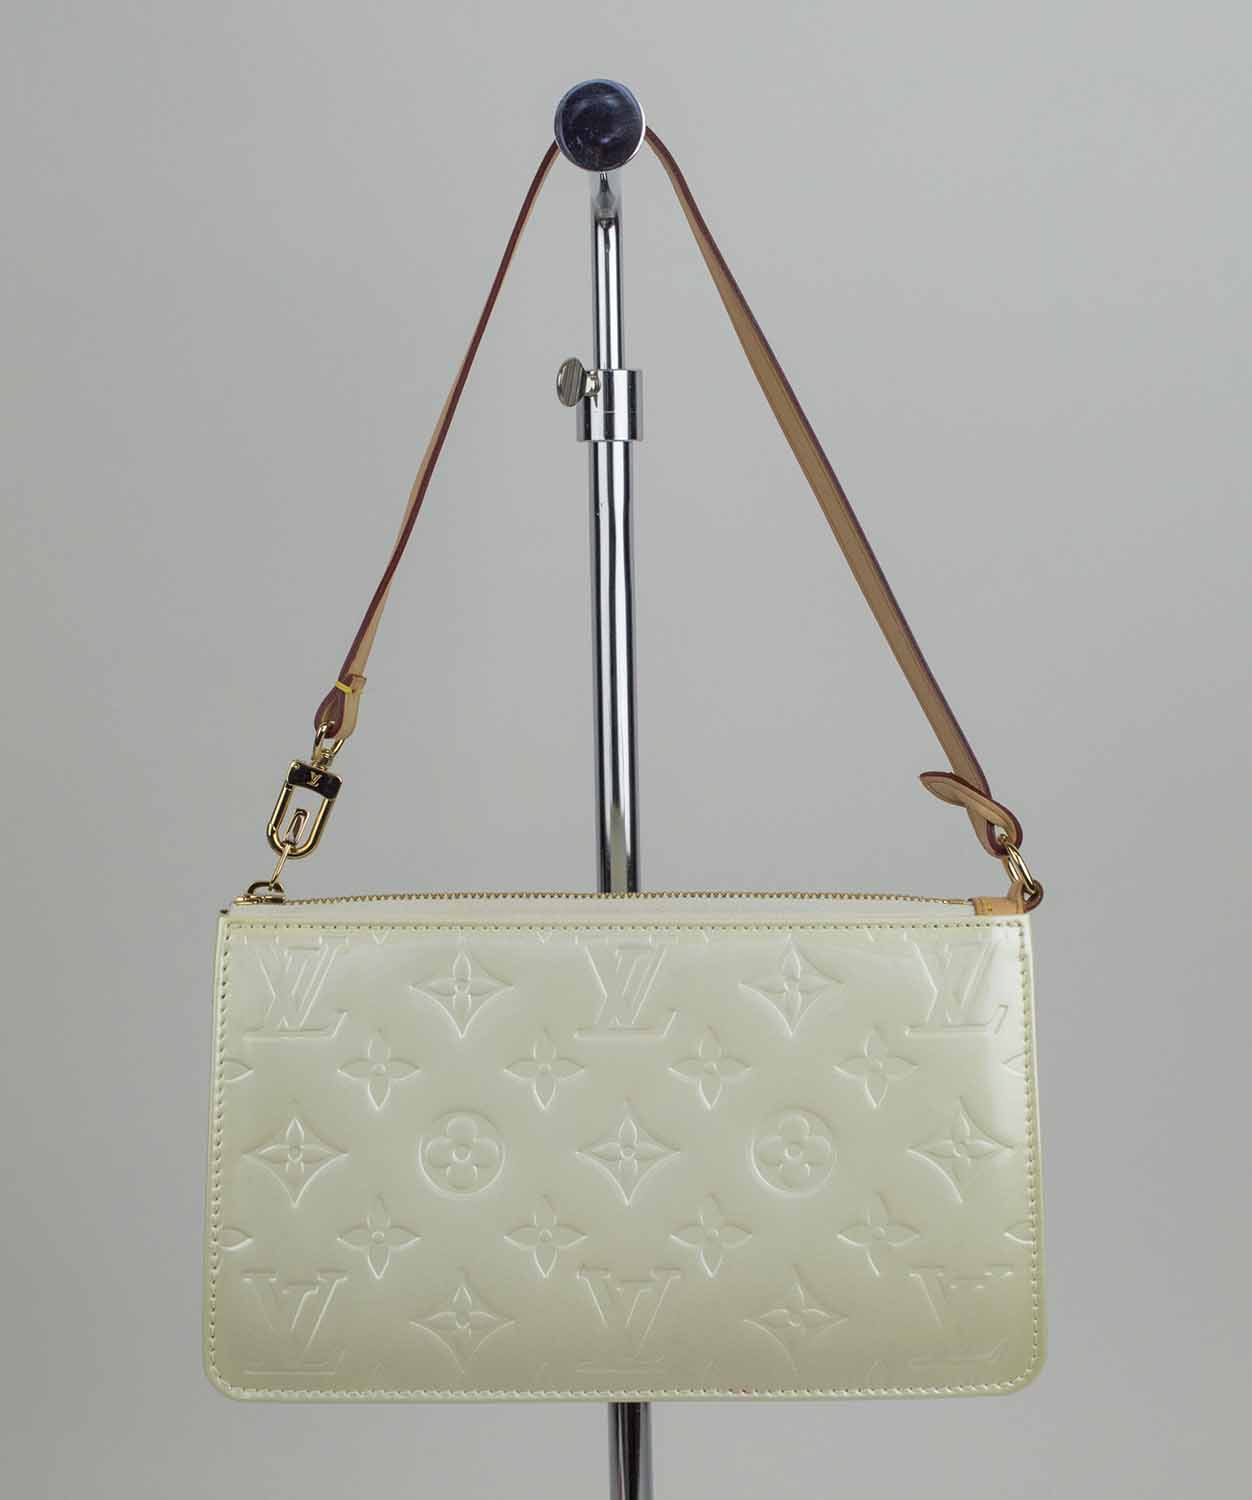 LOUIS VUITTON ACCESSOIRE CLUTCH/WRIST BAG, patent leather with gold tone hardware, top zip ...